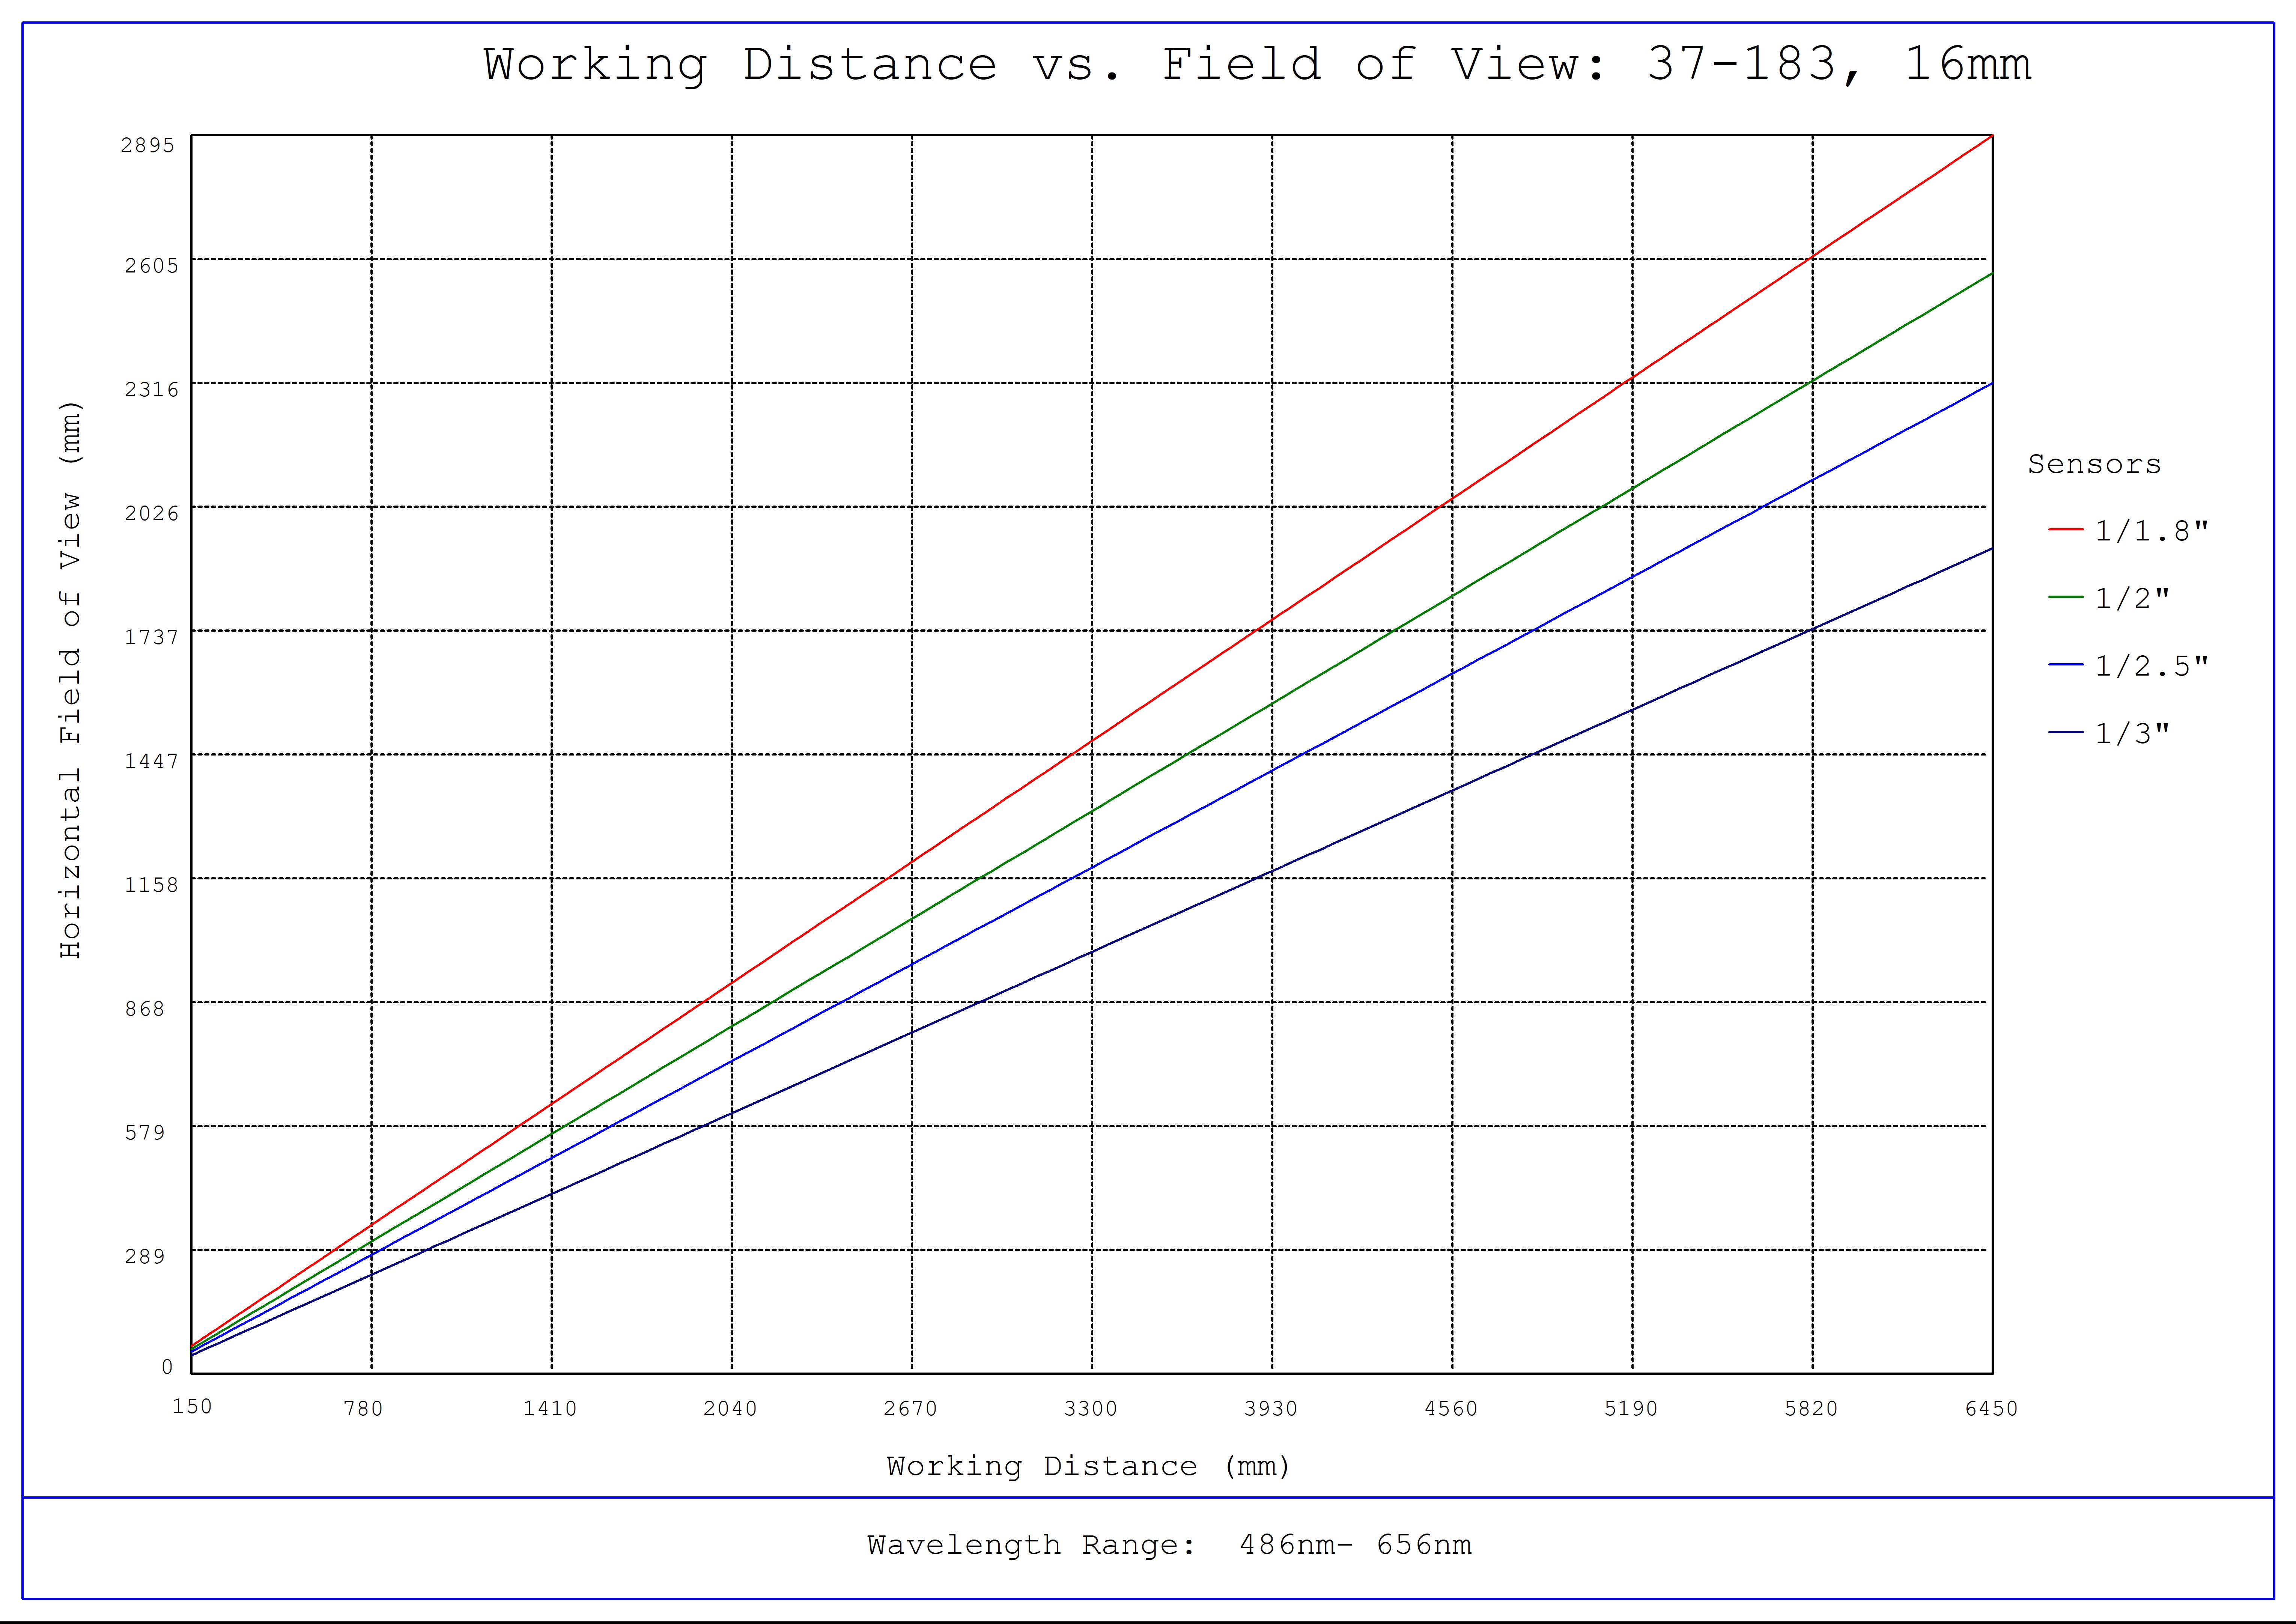 #37-183, 16mm FL f/5.6 Blue Series M12 Lens, Working Distance versus Field of View Plot